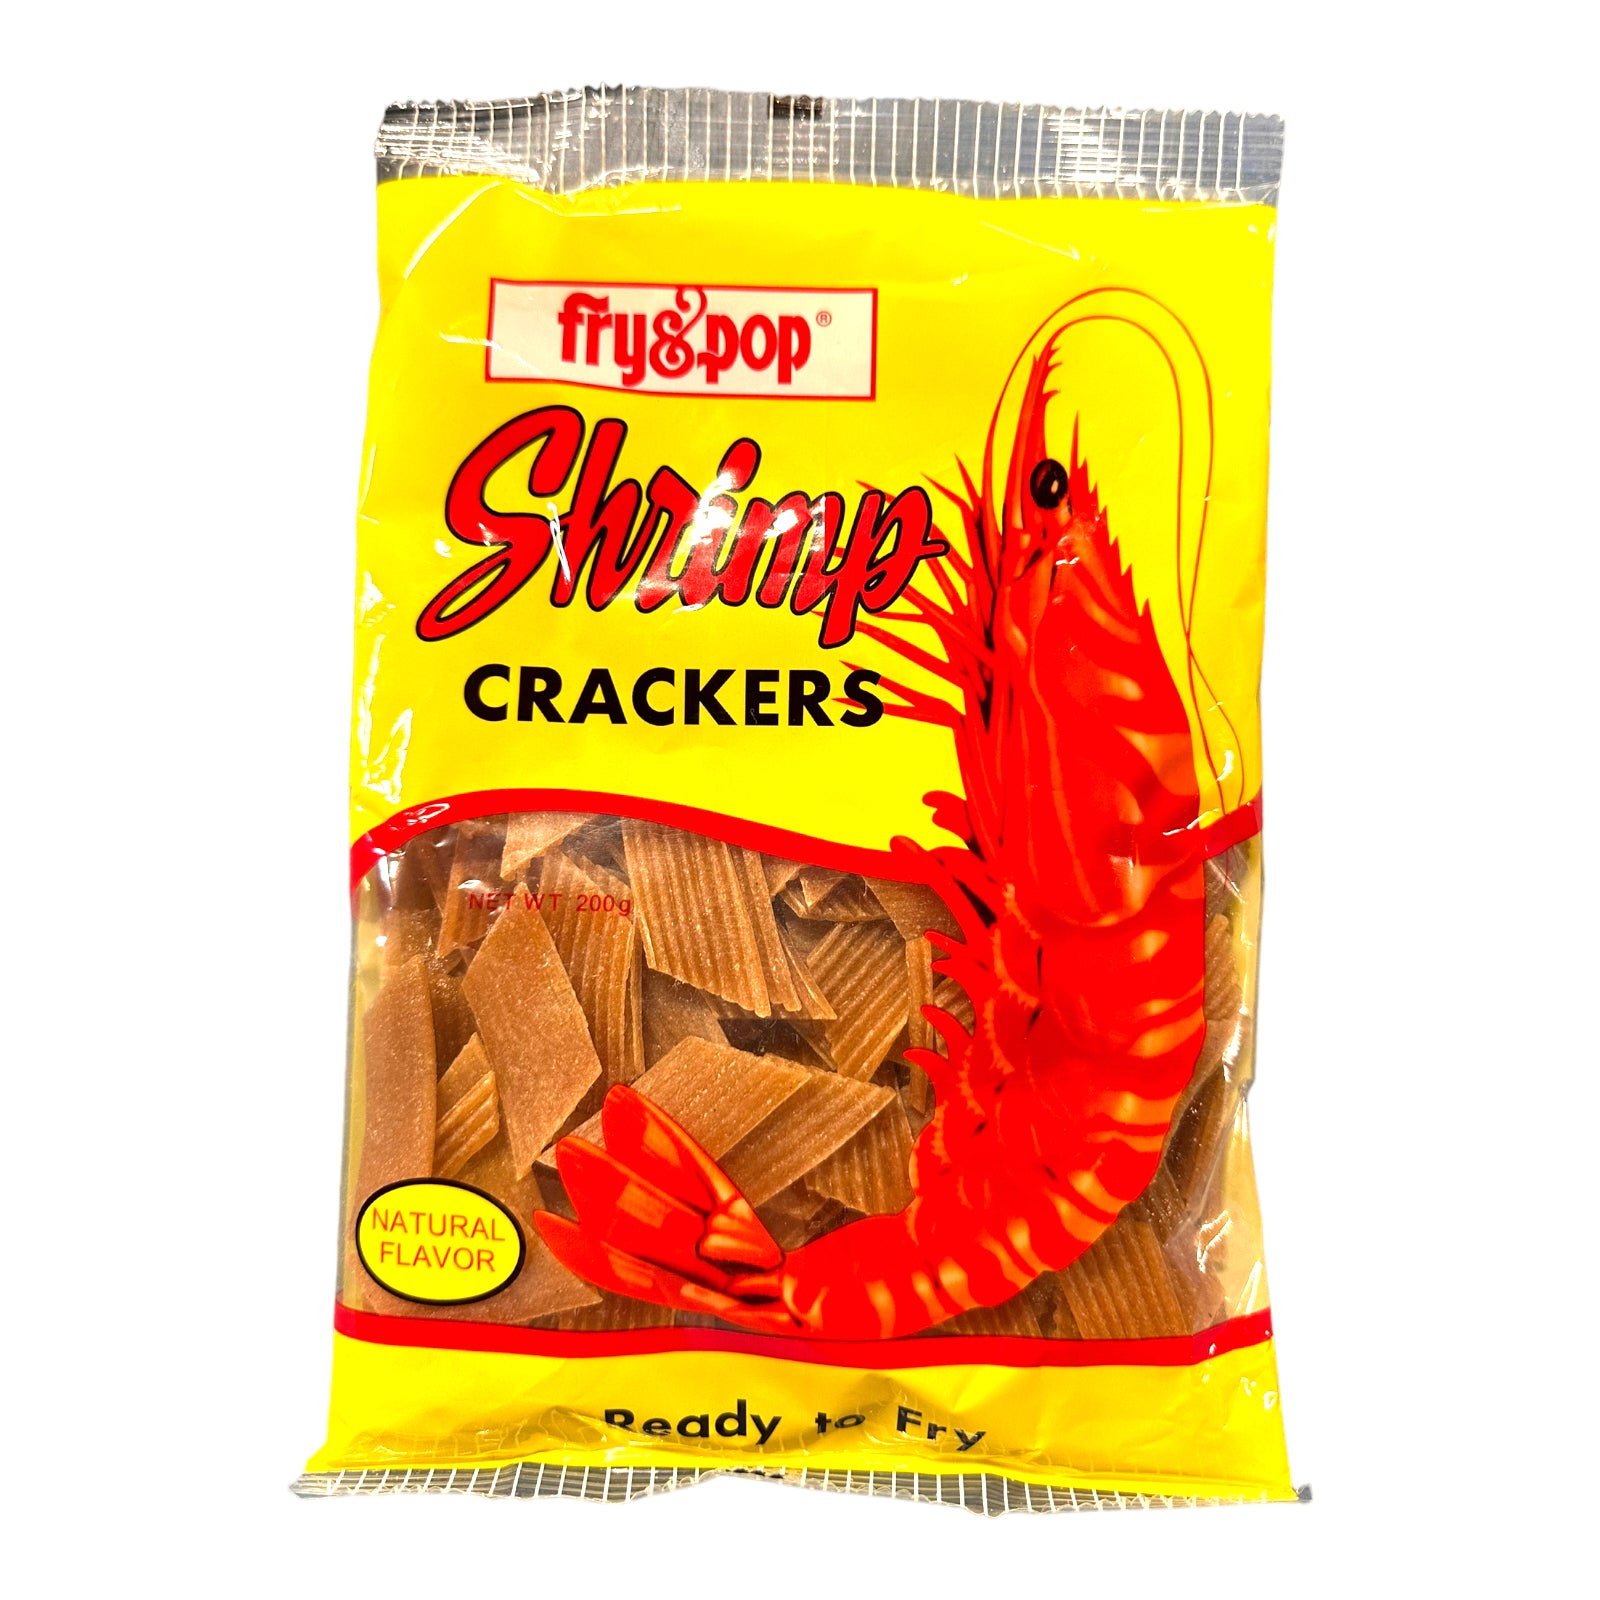 Fry & Pop - Shrimp Cracker - Ready To fry - 200g